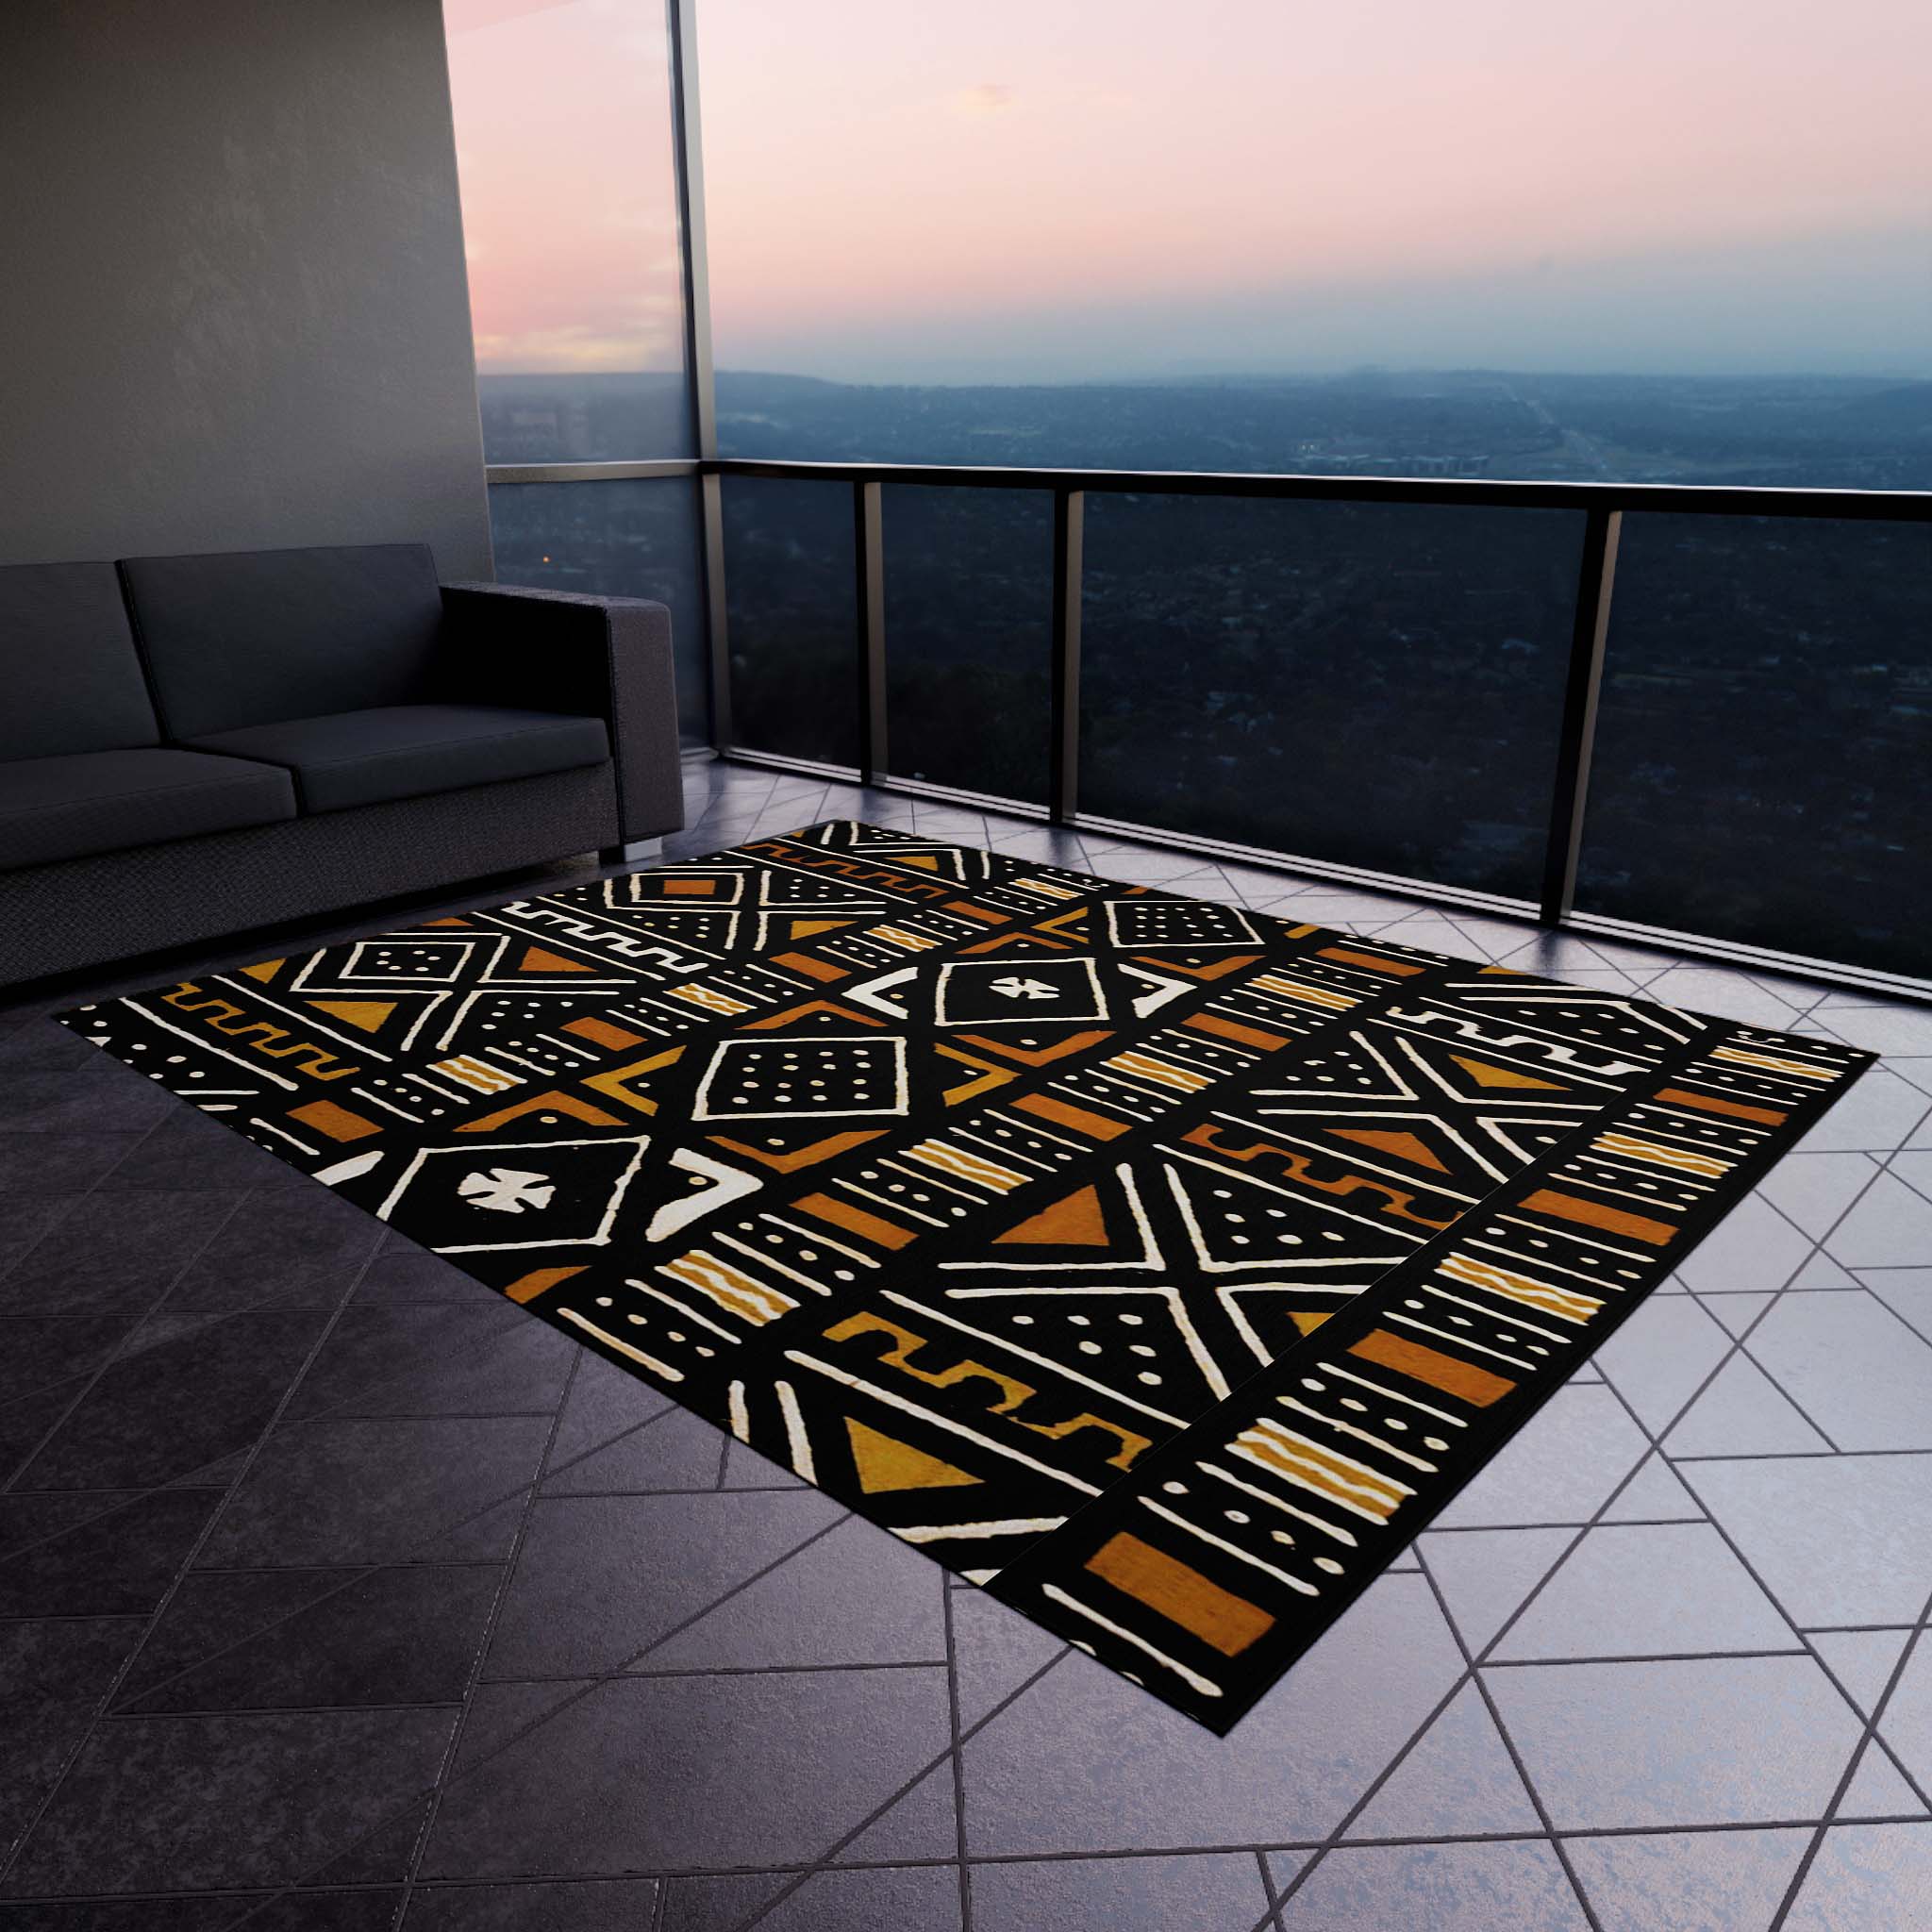 Outdoor African Print Carpet Rug Bogolan Mudcloth Print